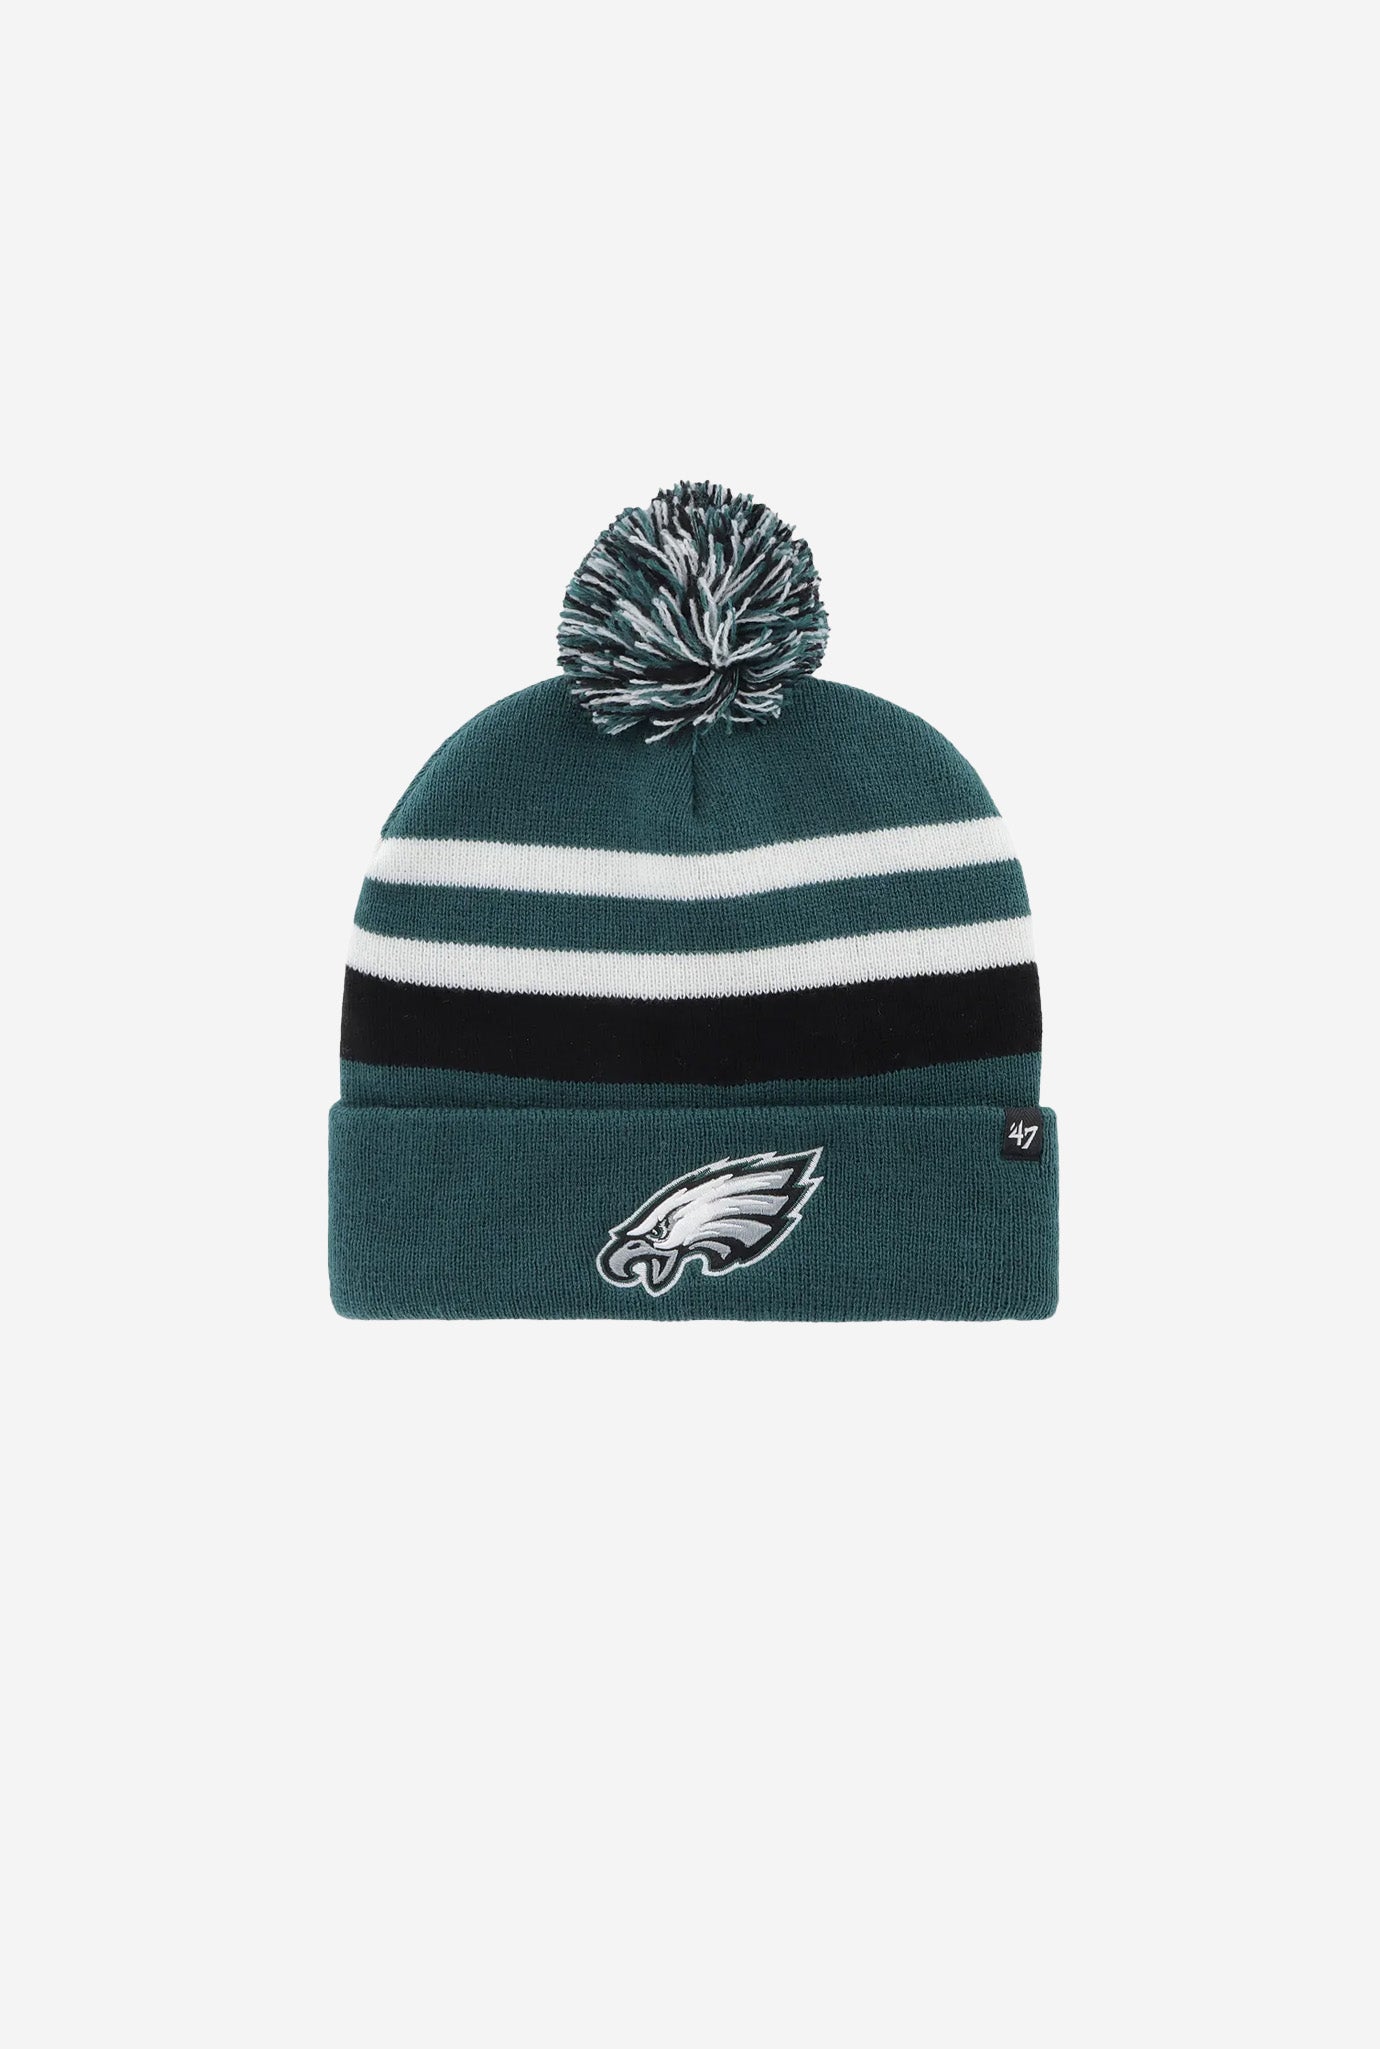 Philadelphia Eagles Raised Cuff Knit Hat